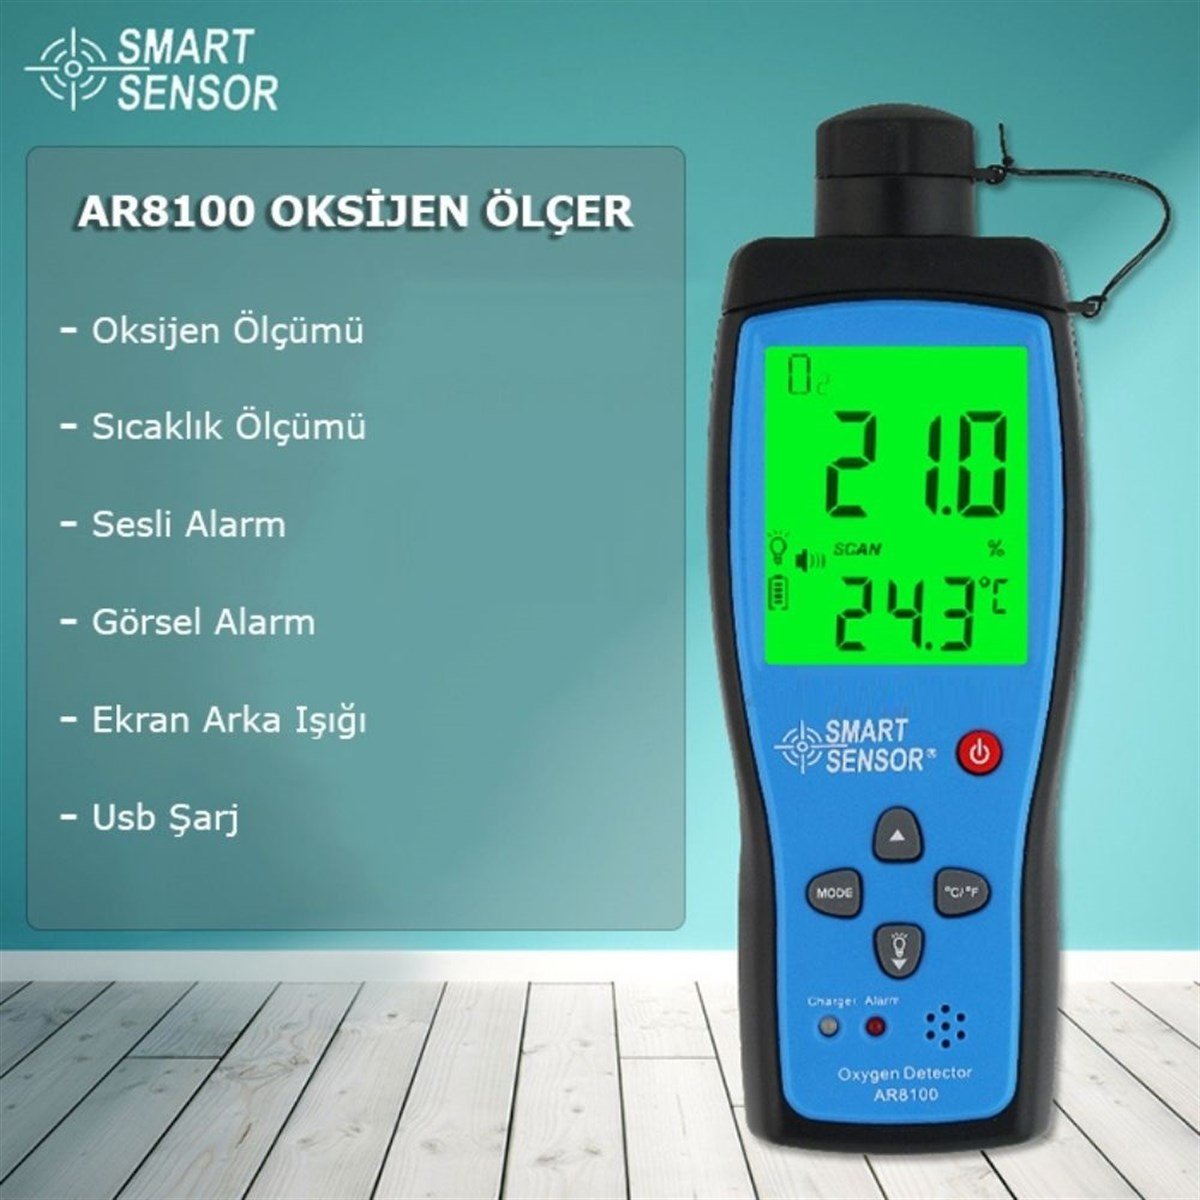 Smart Sensor AR 8100 Oksijen Ölçüm Cihazı | zoofarm.com.tr